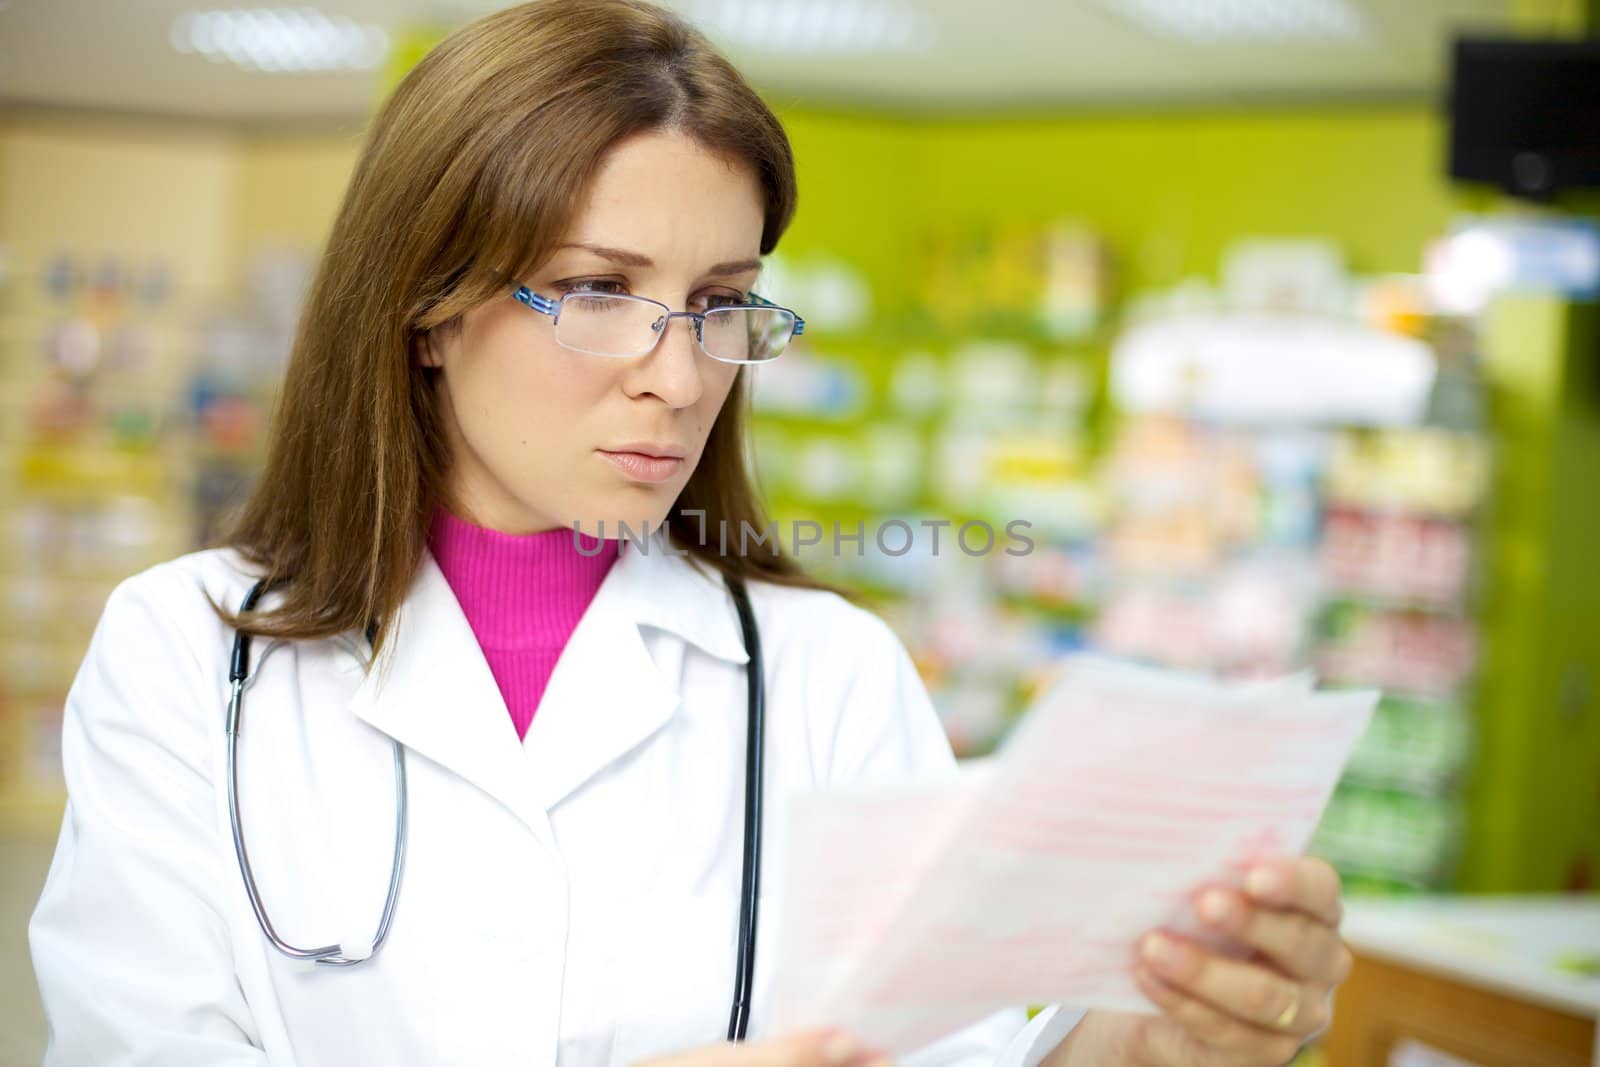 Female doctor reading prescription in pharmacy by fmarsicano